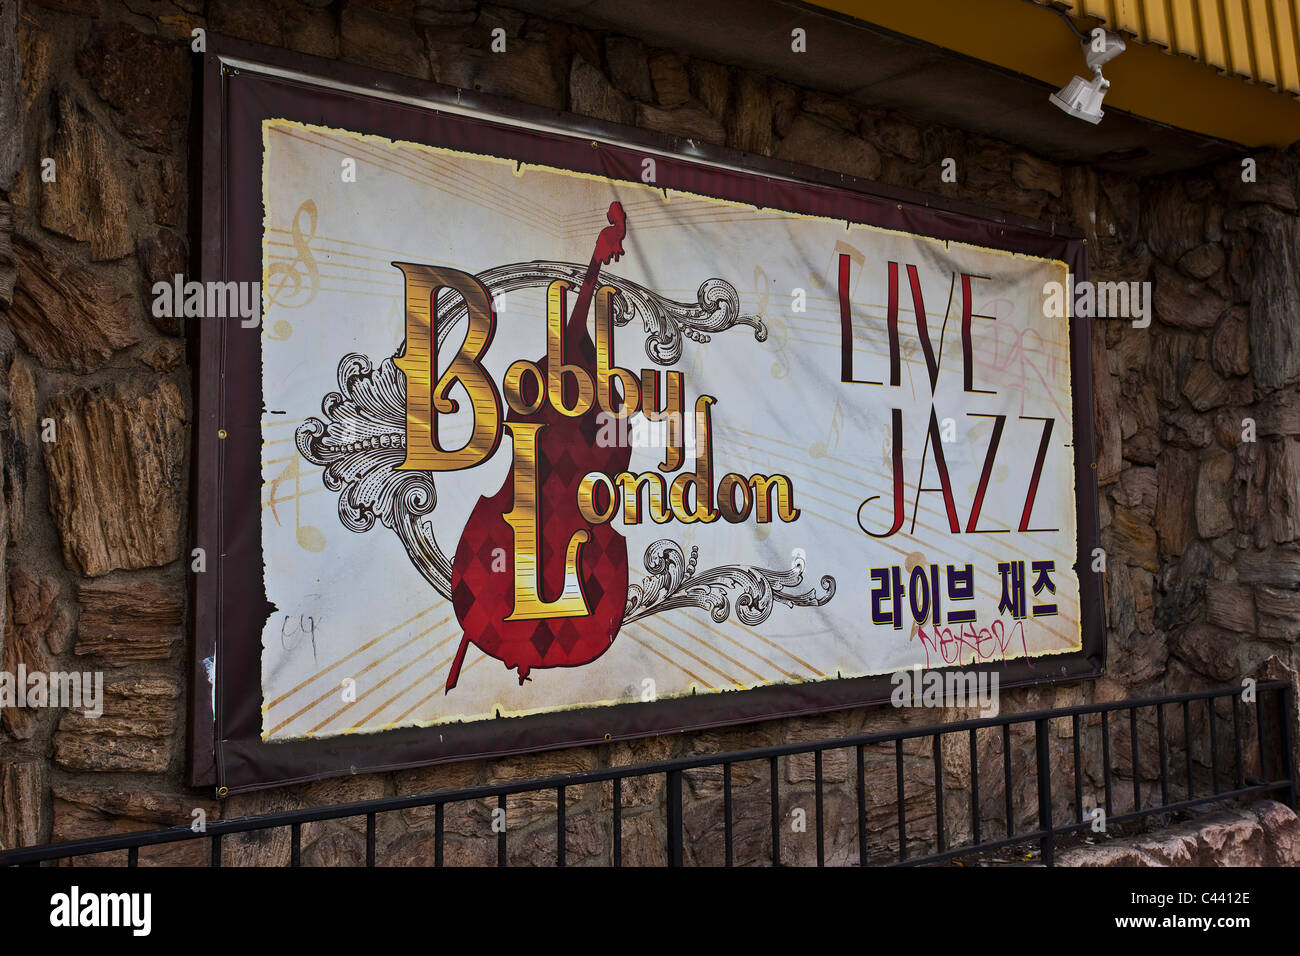 Jazz Banner, Korea Town, Los Angeles, California Stock Photo